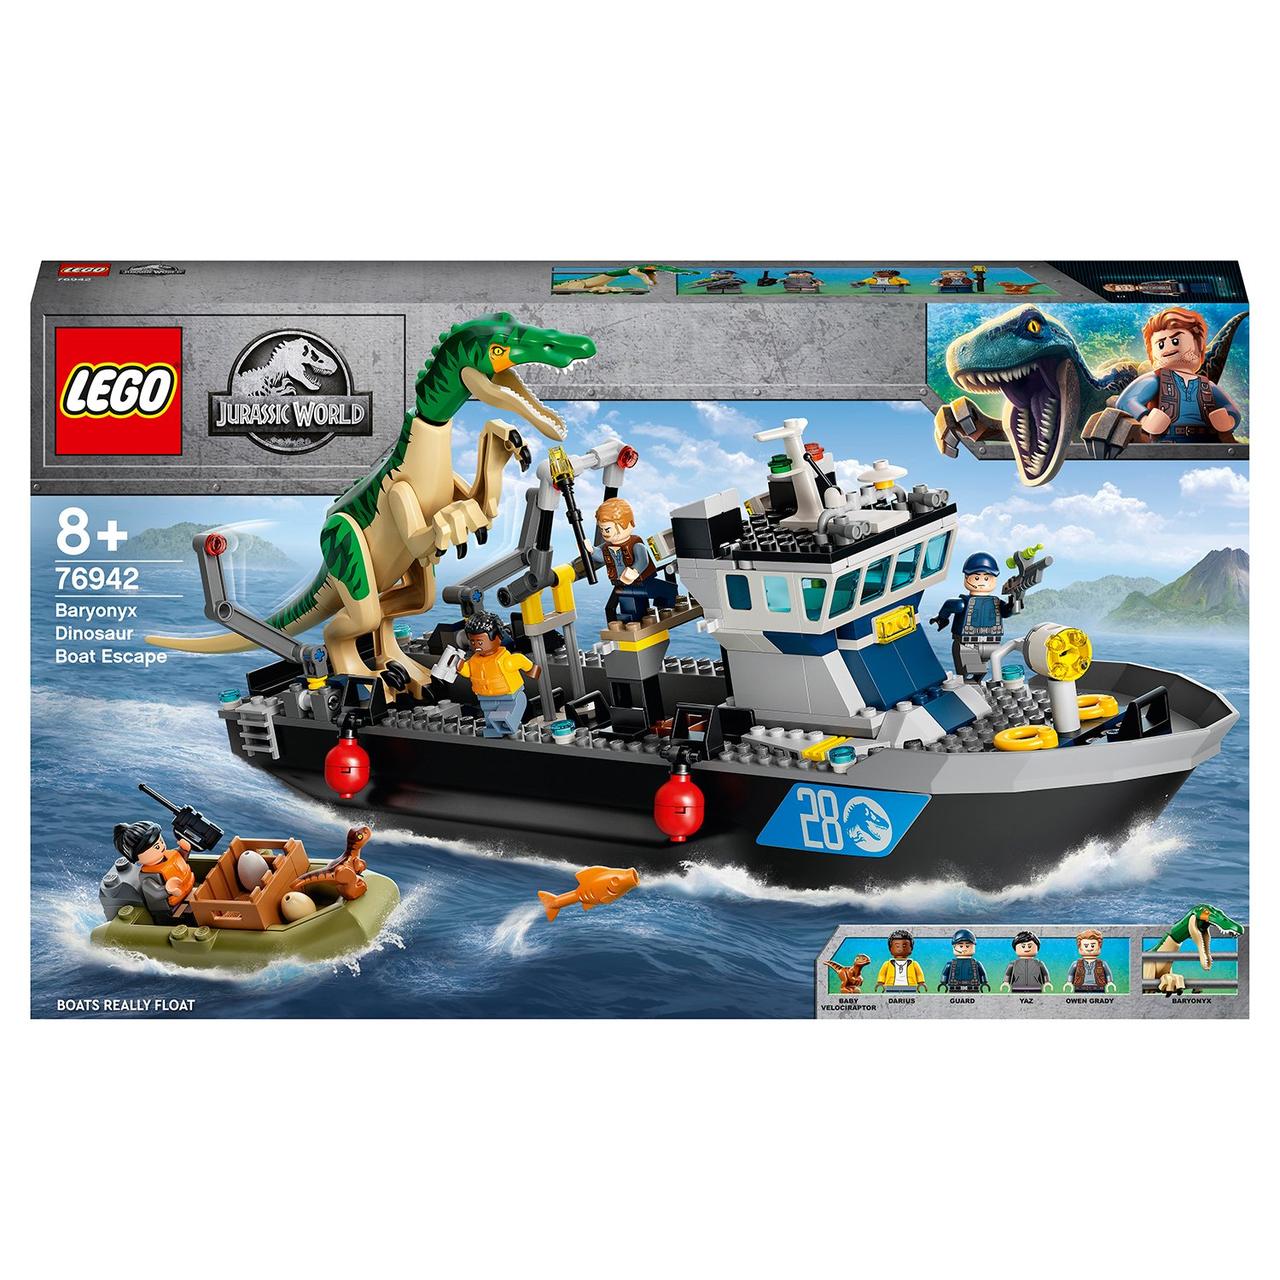 76942 Lego Jurassic World Побег барионикса на катере, Лего Мир Юрского периода